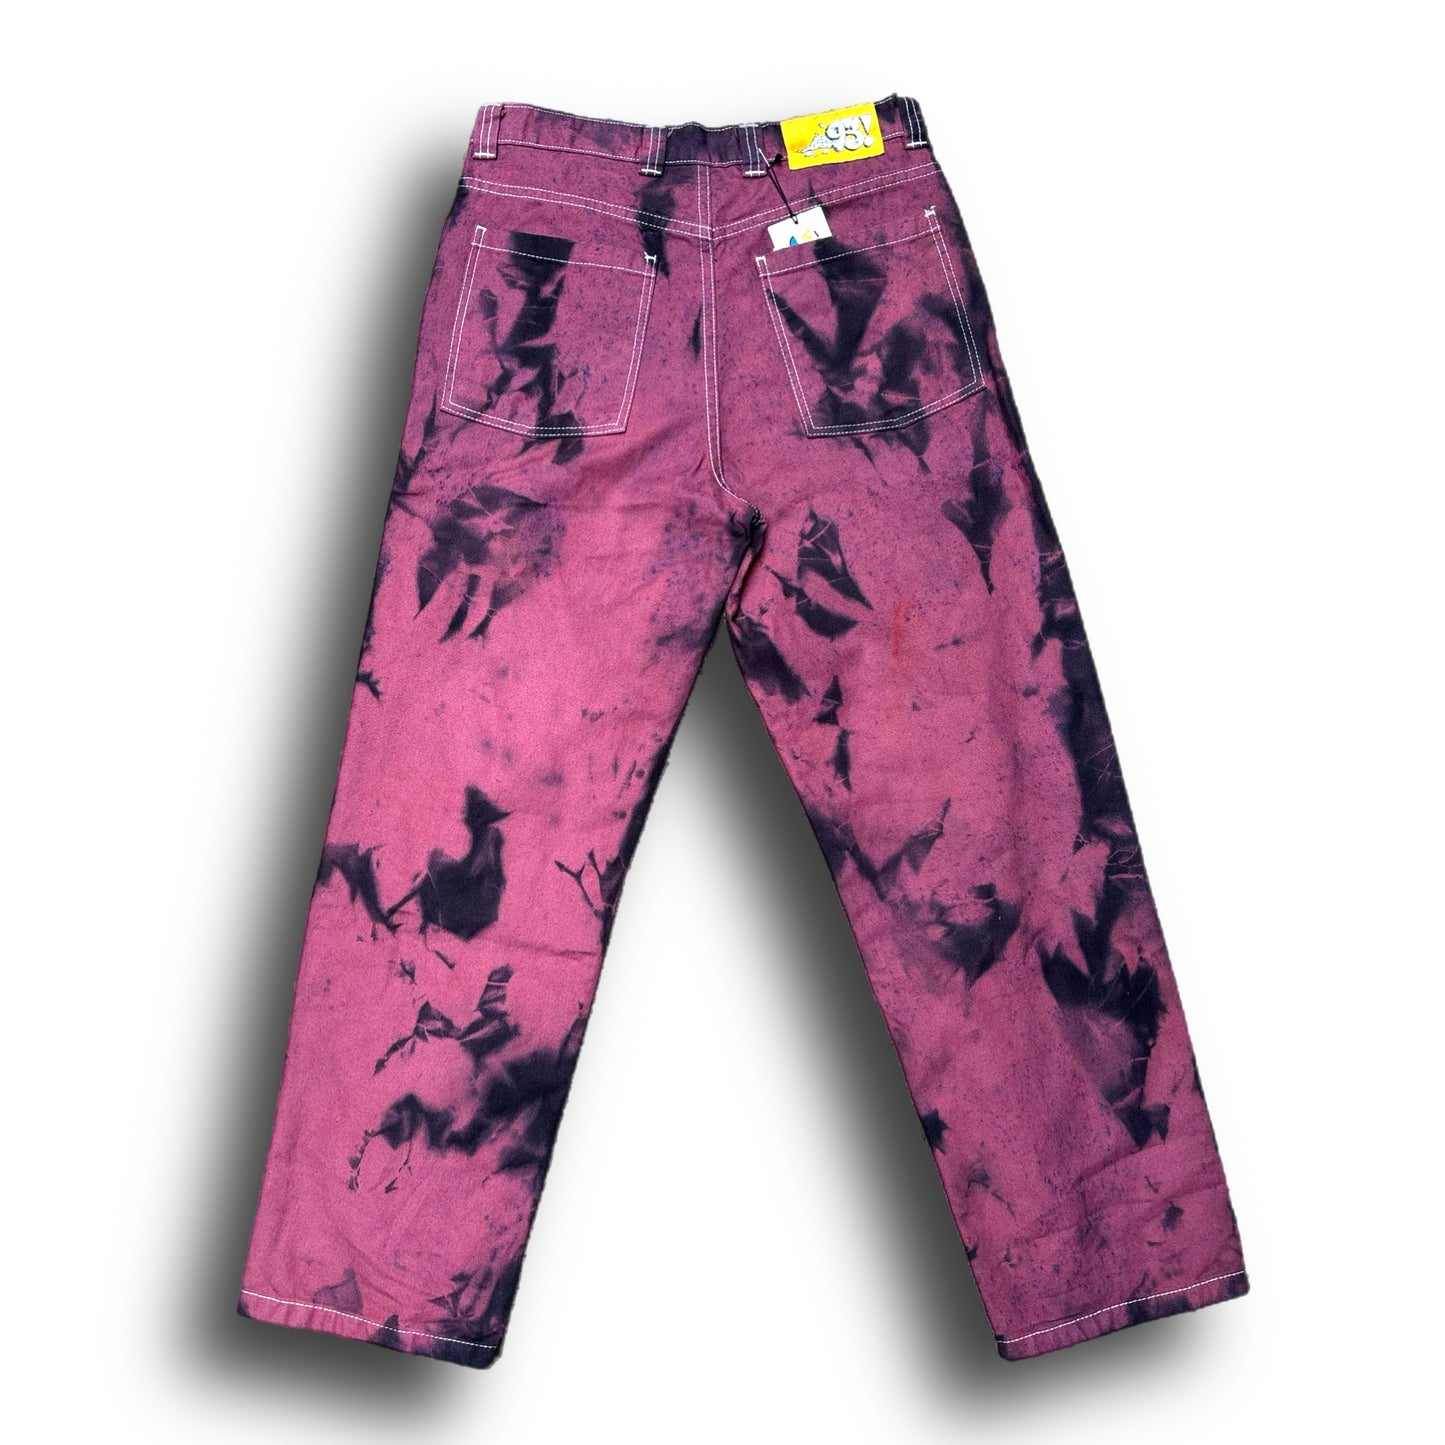 Polar Skate Co. - '93 Work Pants - Over-Dyed - Plum/Black